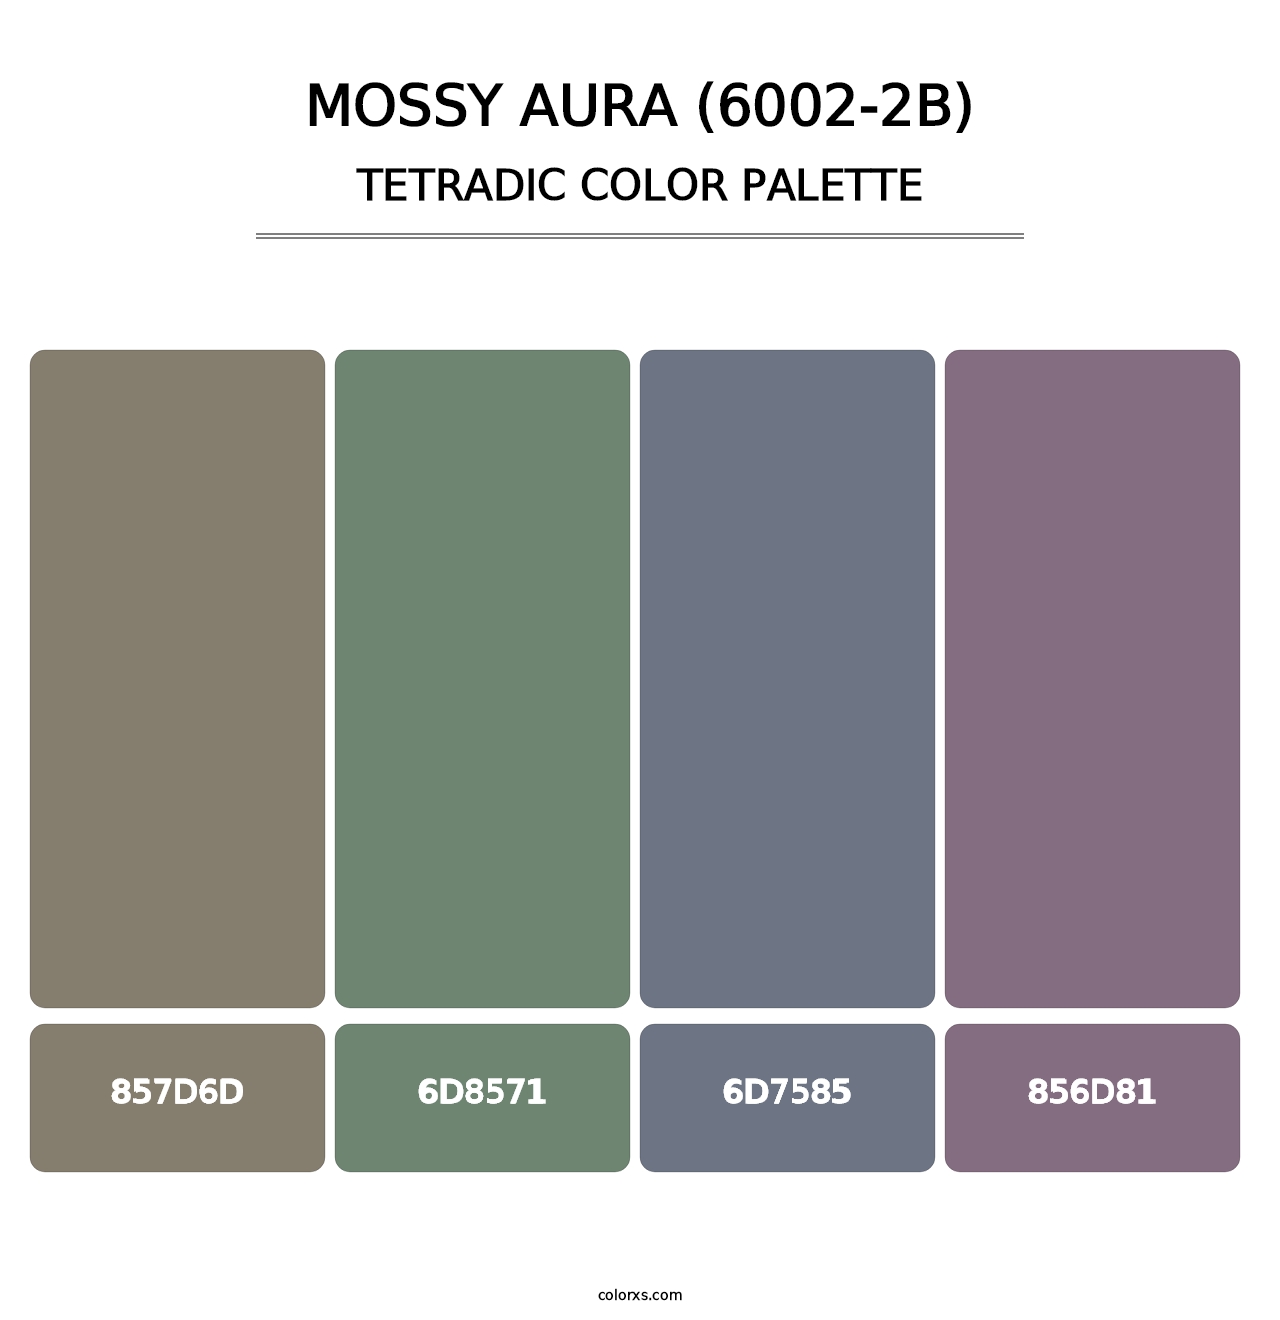 Mossy Aura (6002-2B) - Tetradic Color Palette